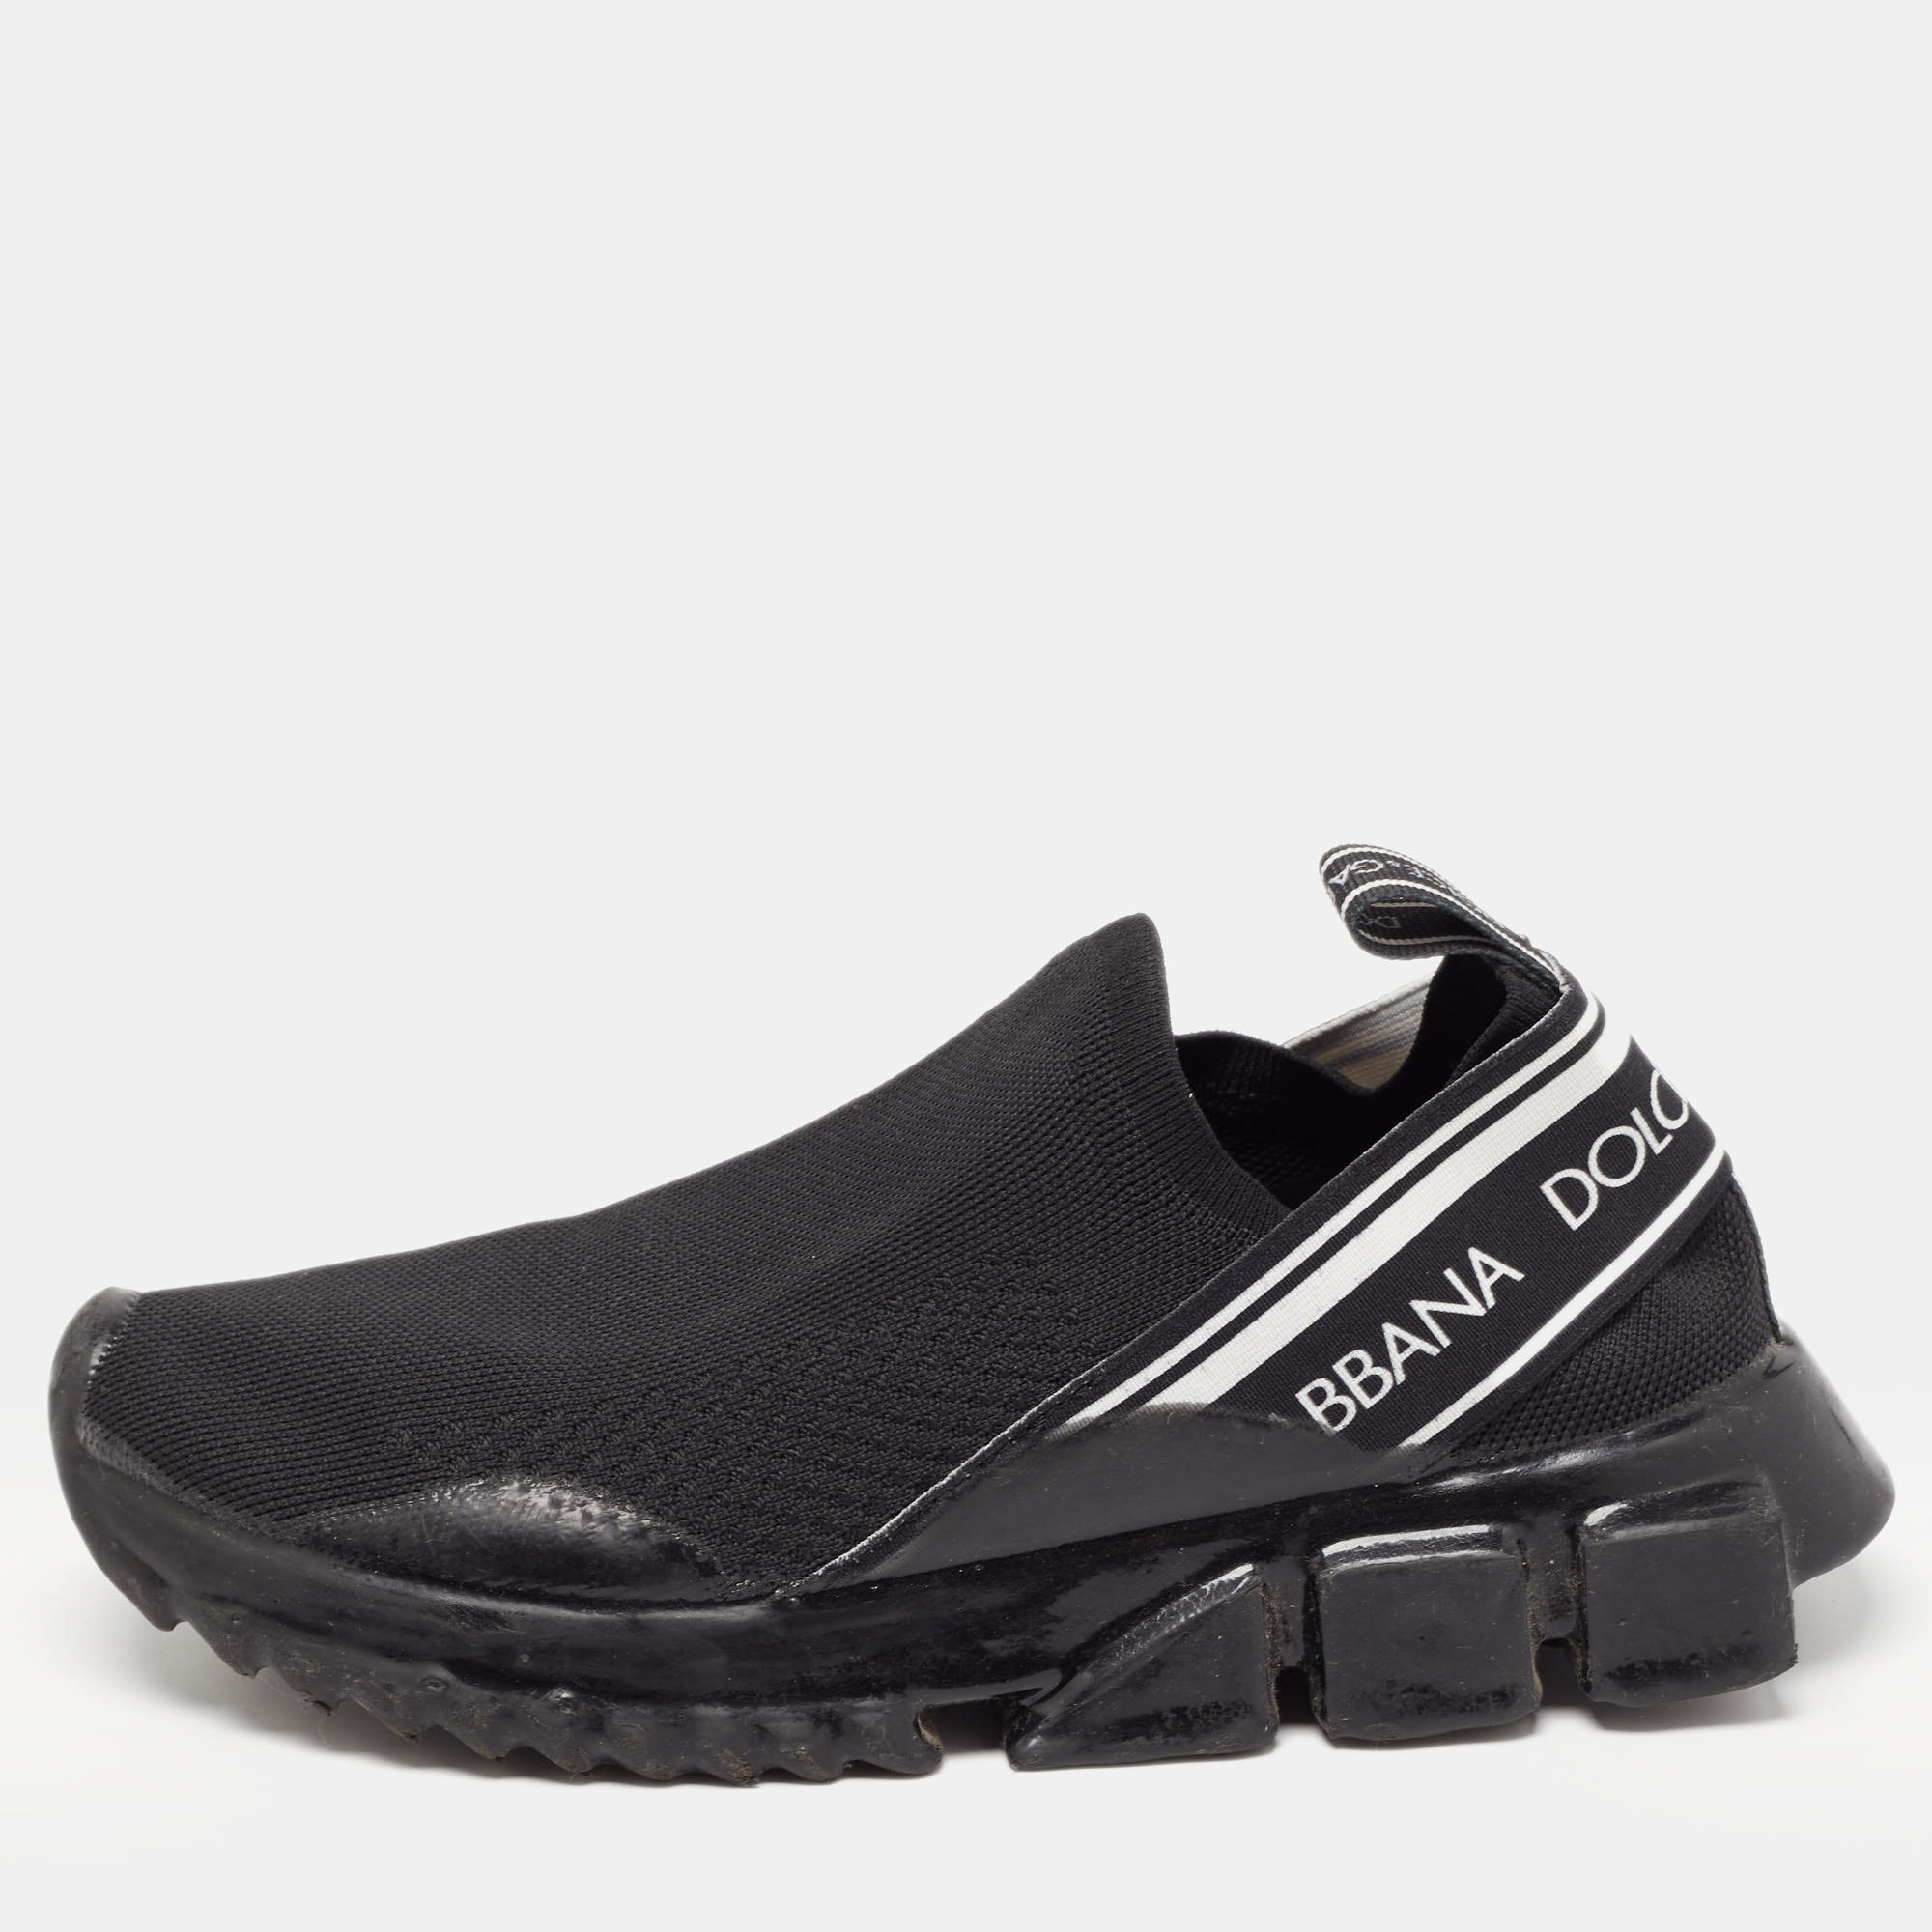 Dolce & gabbana black fabric sorrento slip on sneakers size 38